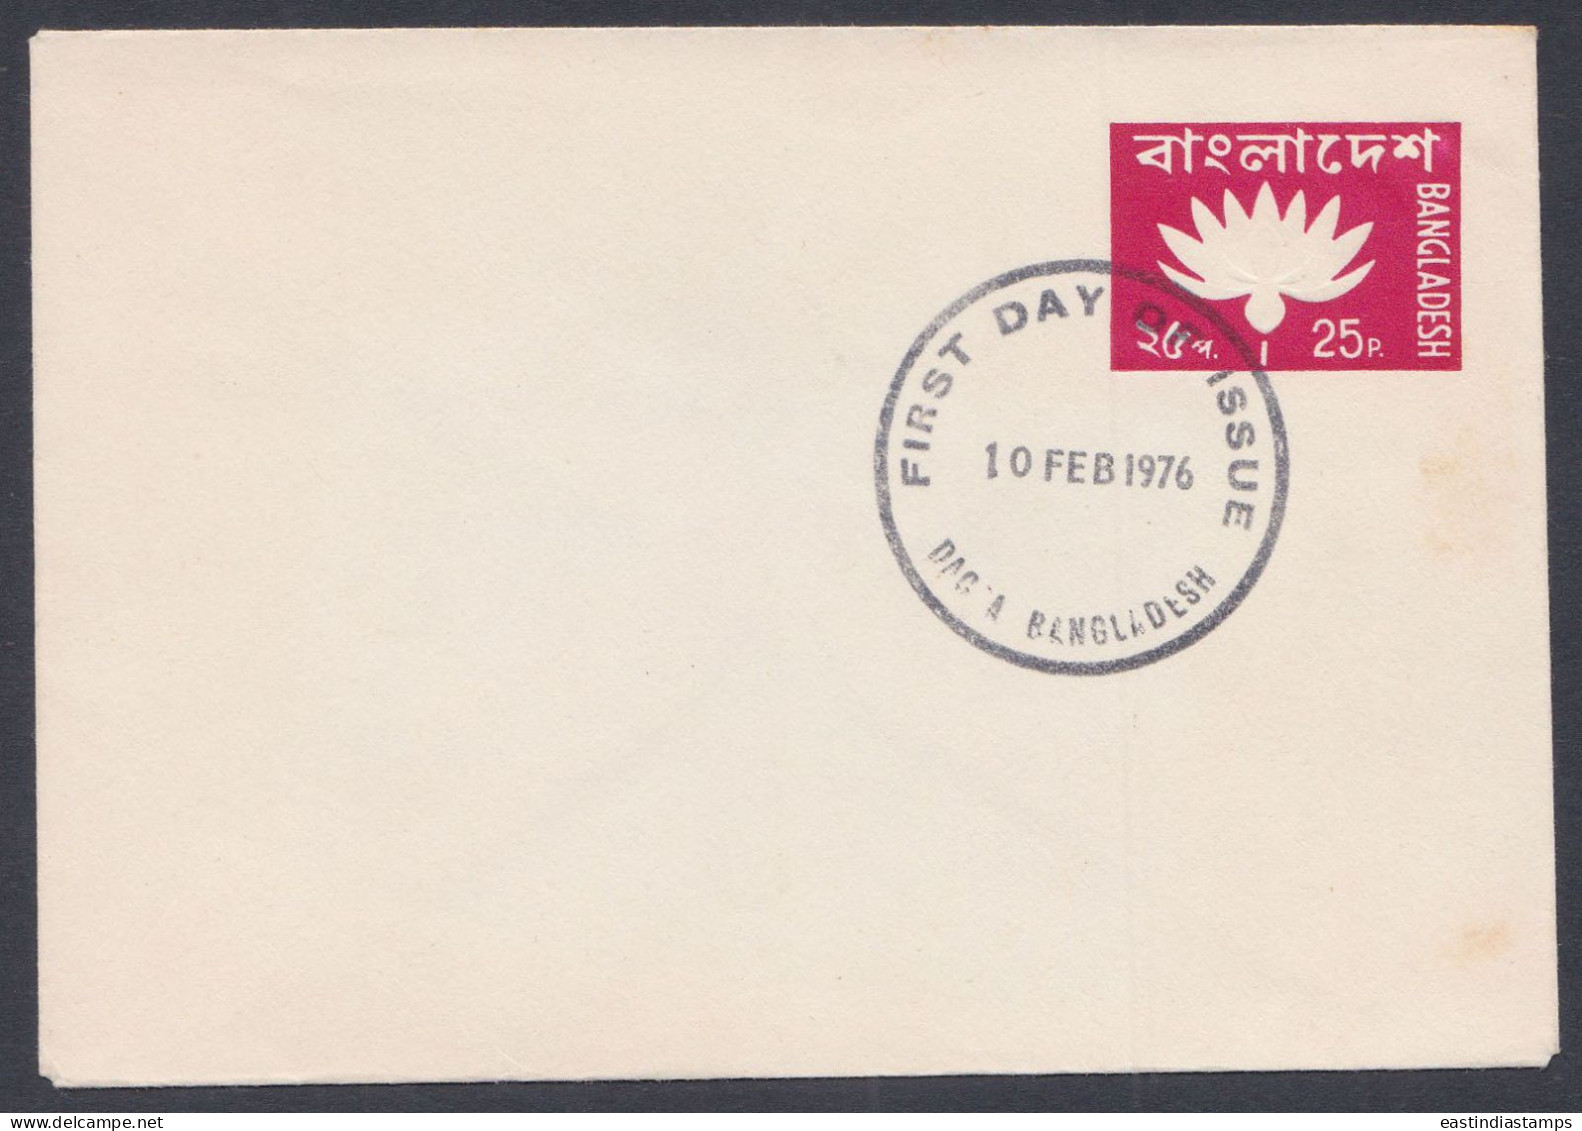 Bangladesh 1976 25 Paisa First Day Issue Postal Envelope, Cover, Postal Stationery - Bangladesch